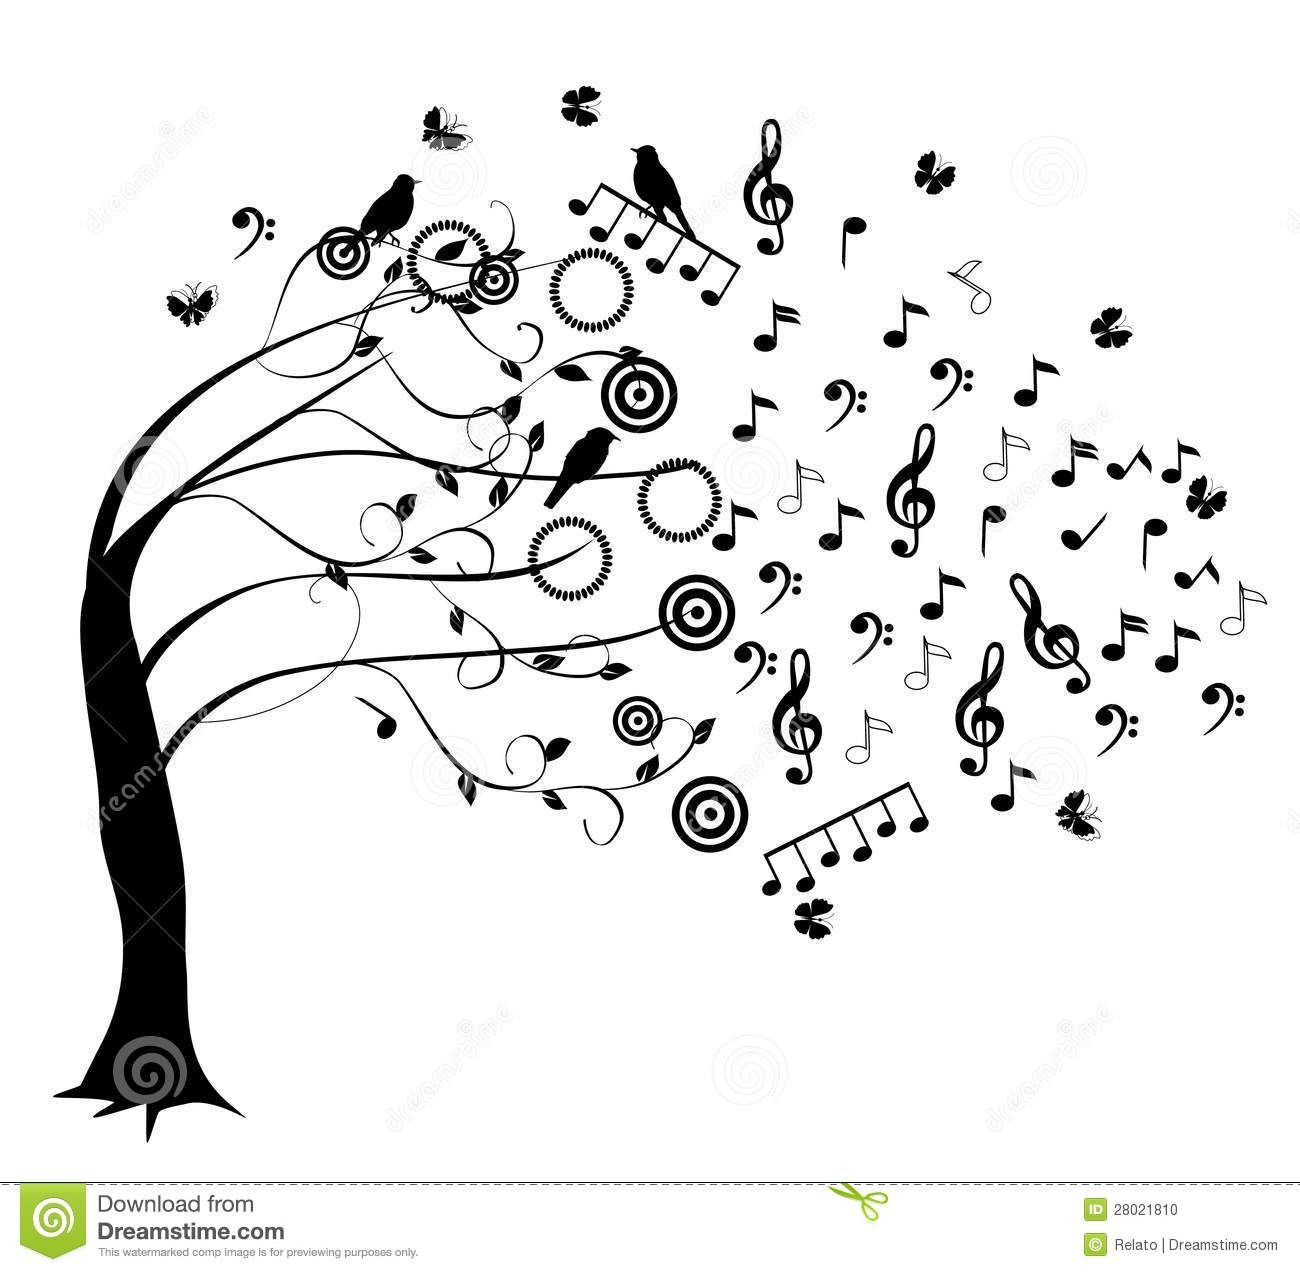 Music Note tree